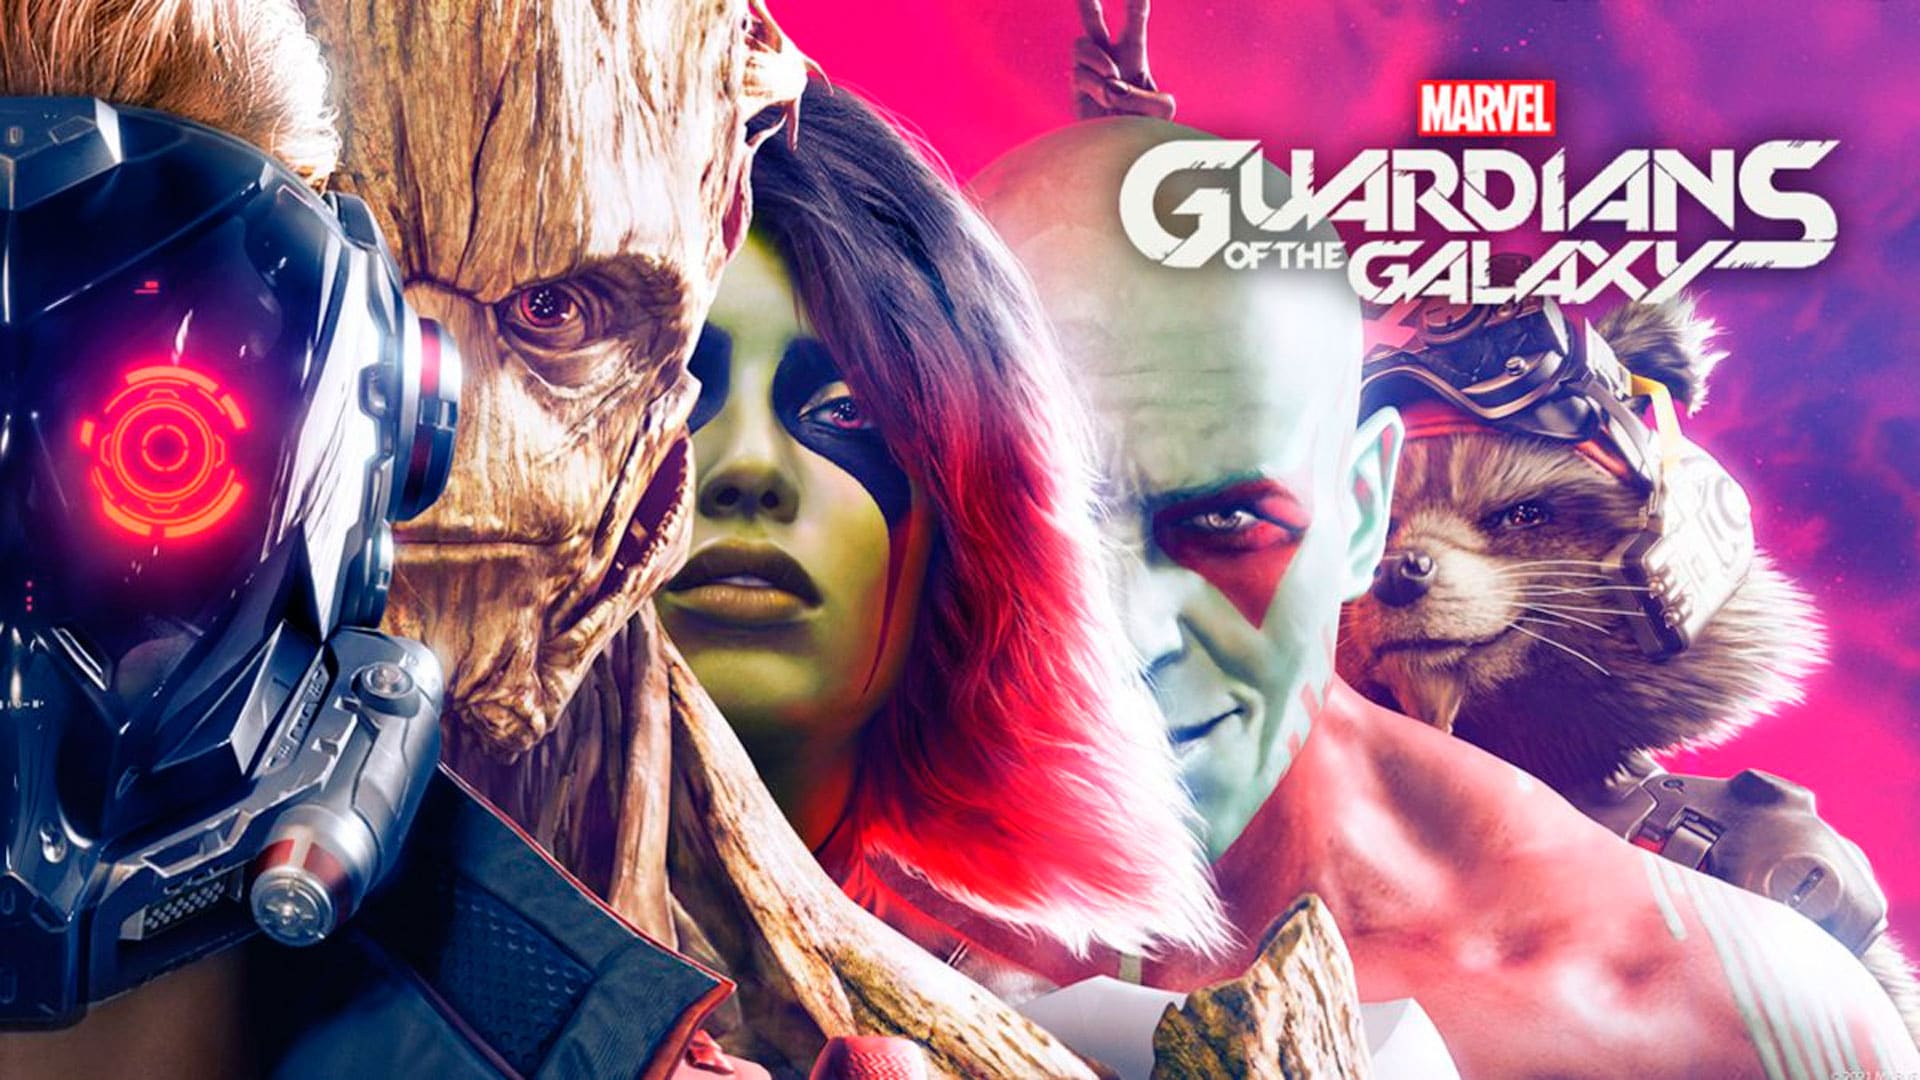 Microsoft 'pagó $ 5-10 millones' de dólares para lanzar Marvel's Guardians of the Galaxy en Game Pass, afirma un analista, GamersRD